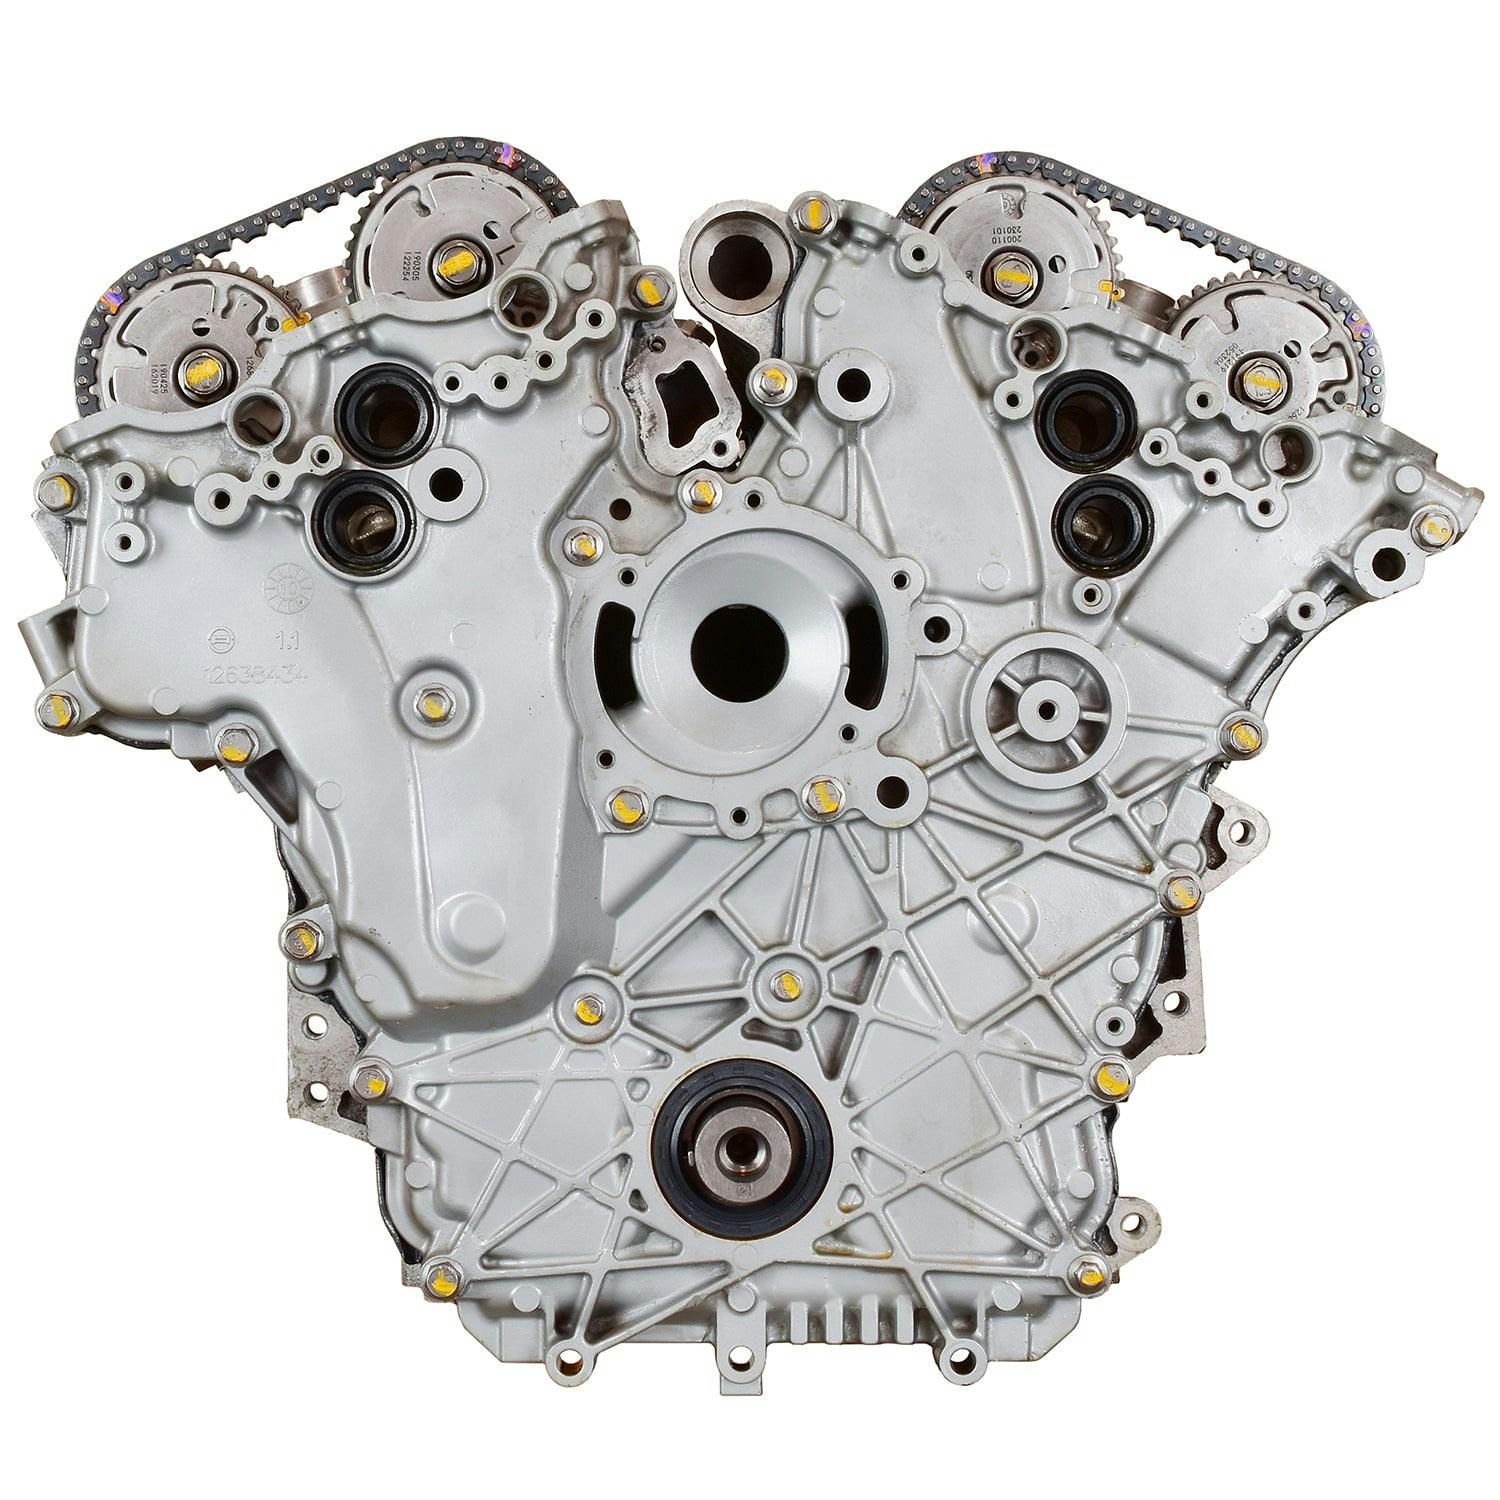 3L V6 Engine for 2012-2014 Cadillac CTS/Chevrolet Captiva Sport, Equinox/GMC Terrain